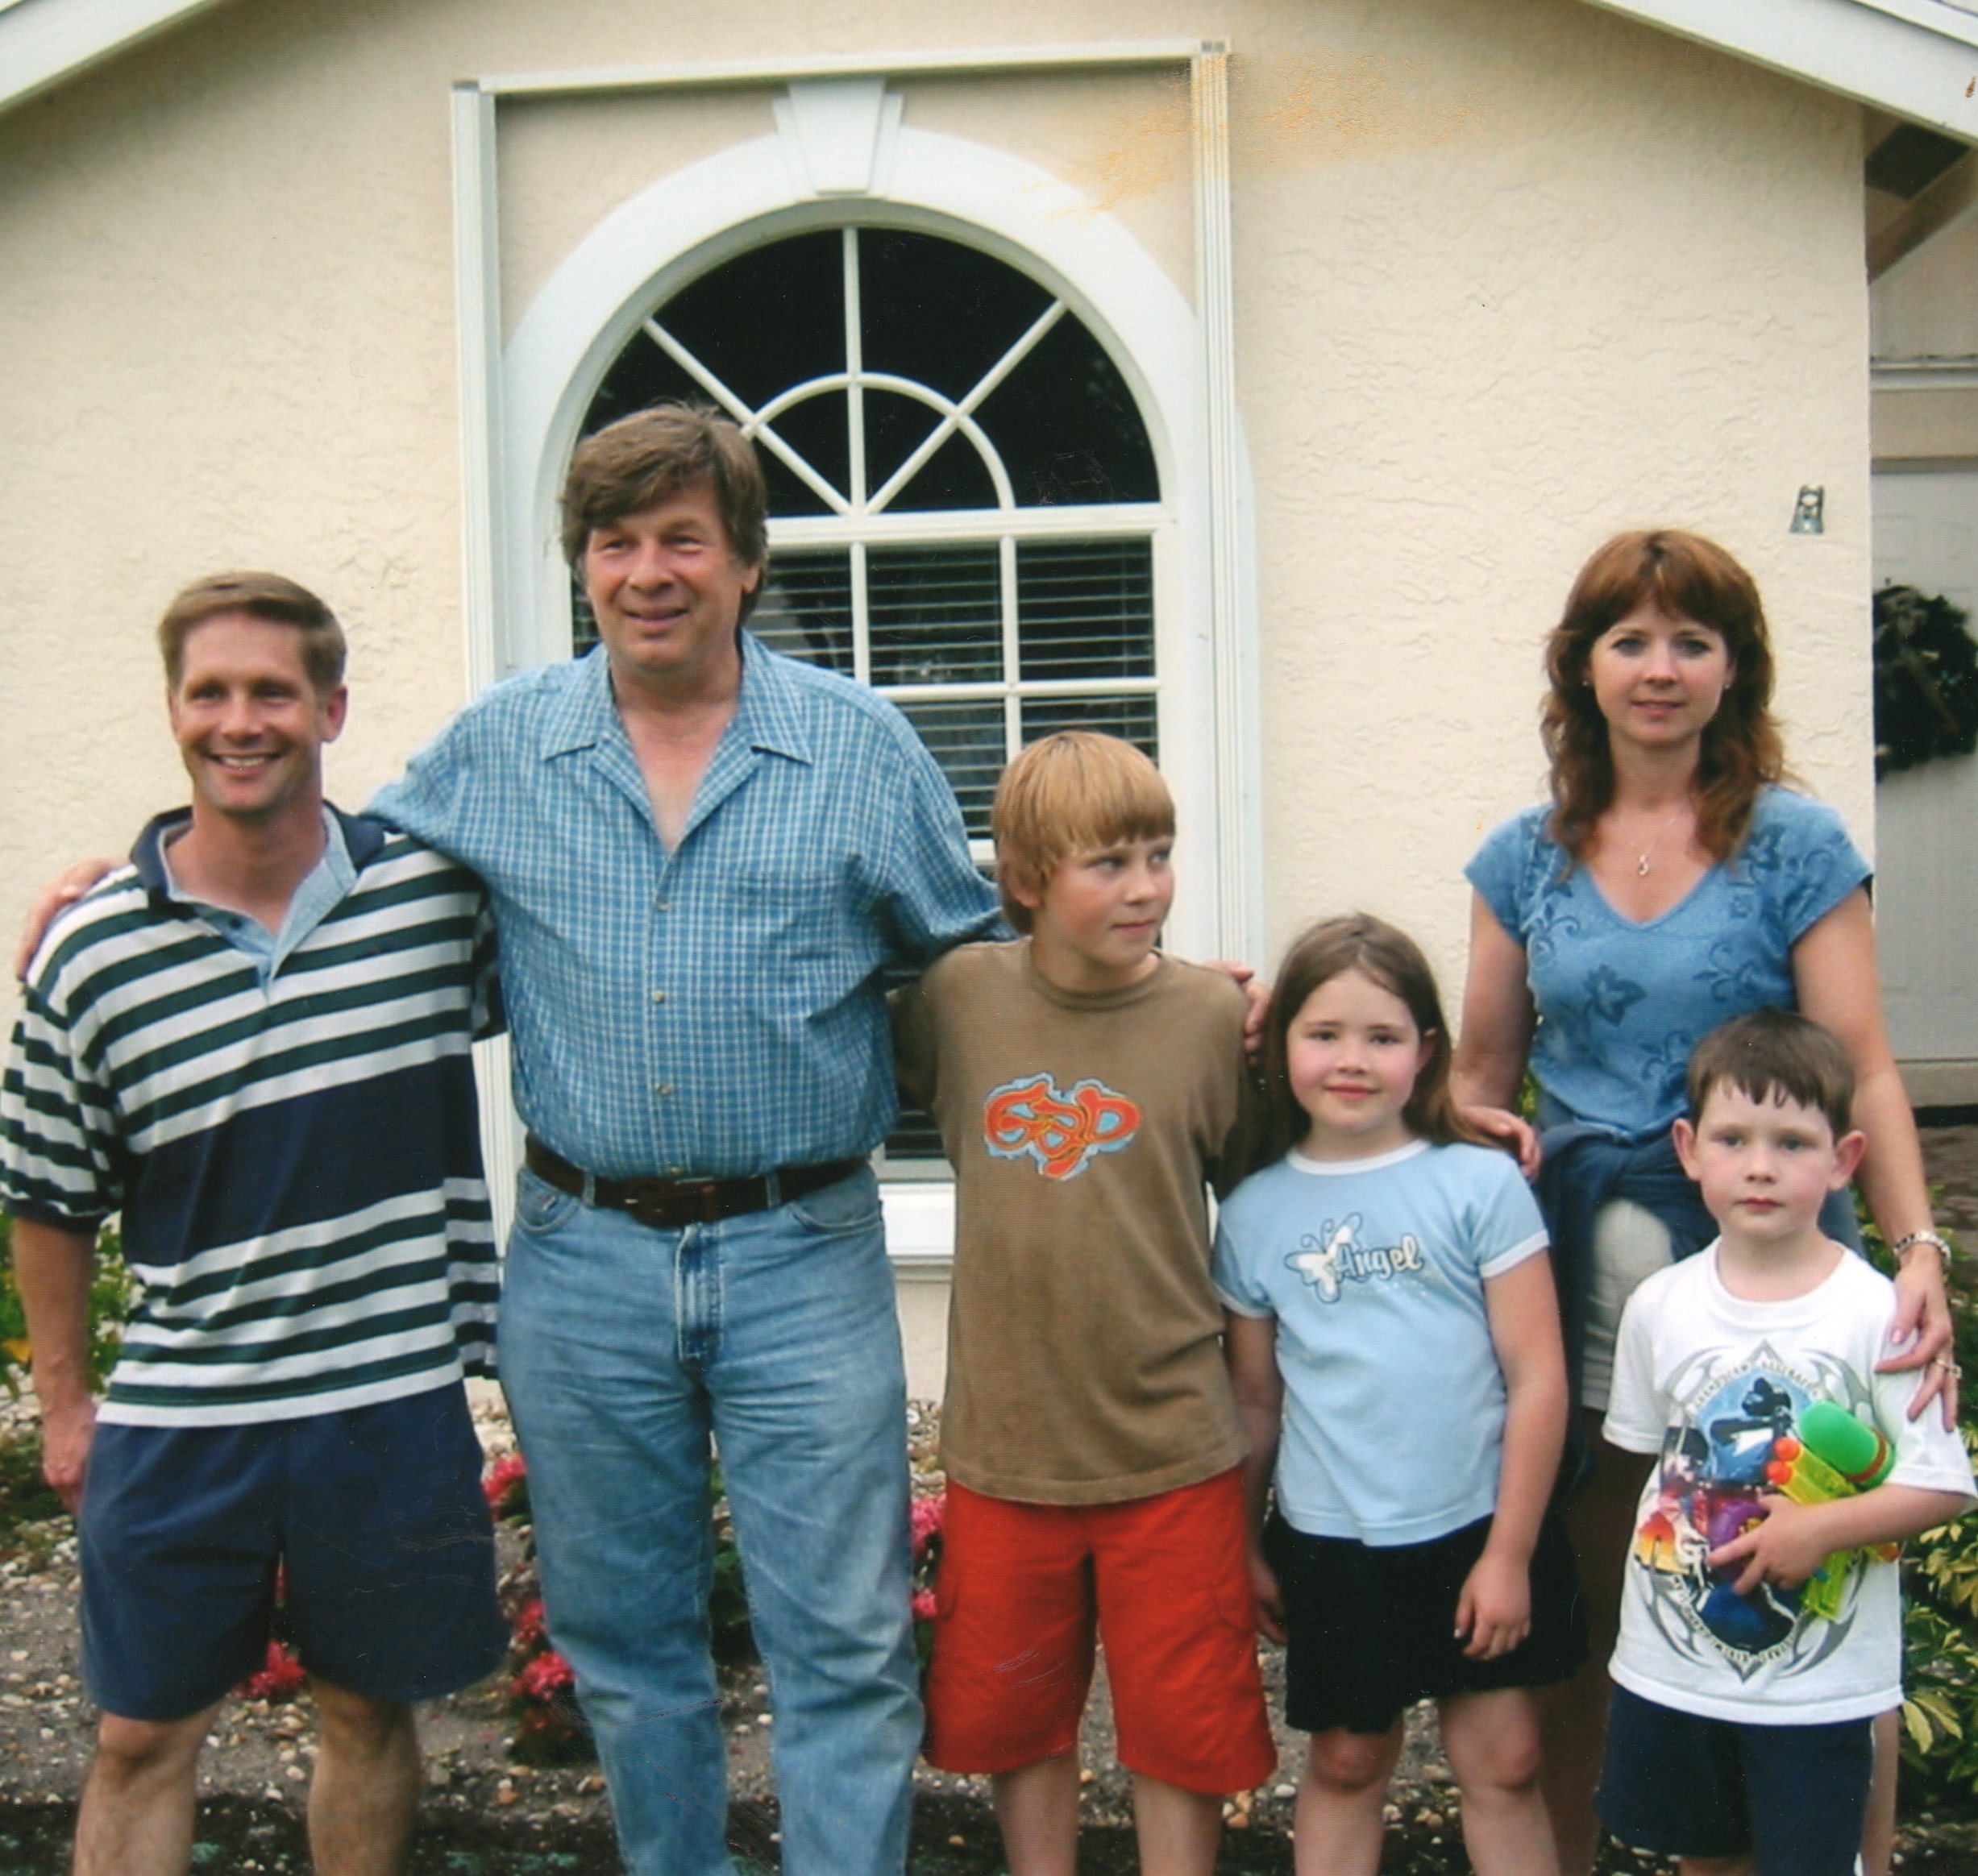 Michael (oldest son), john Otrin, Marty ( grandson) , Megan ( granddaughter), Jamie (Daughter-in-law), & Garrett (grandson) .2007, Florida.